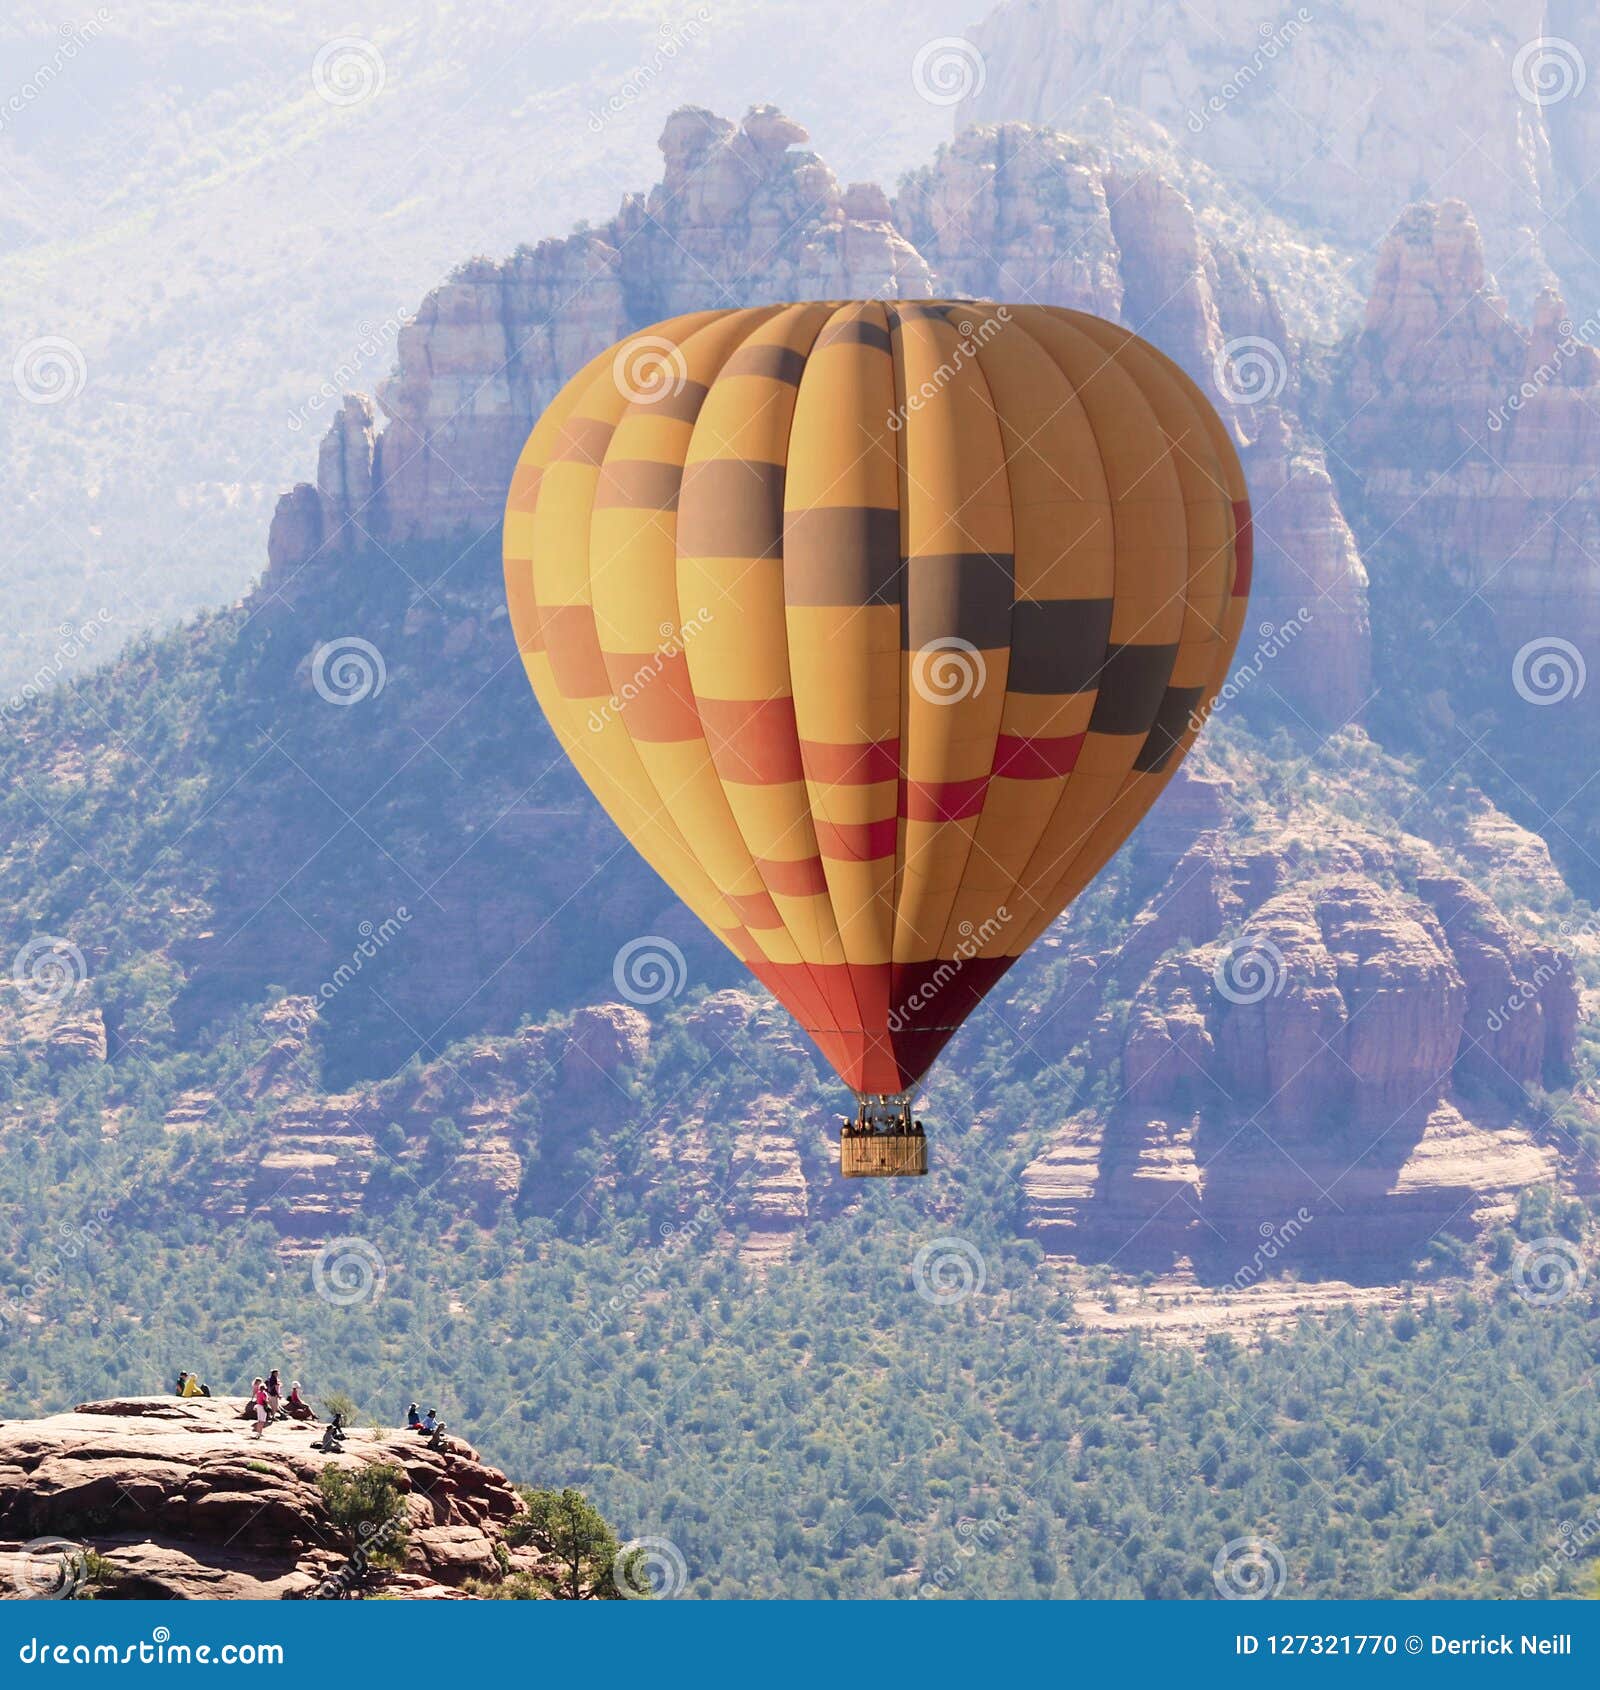 a hot air balloon soars near sedona, arizona